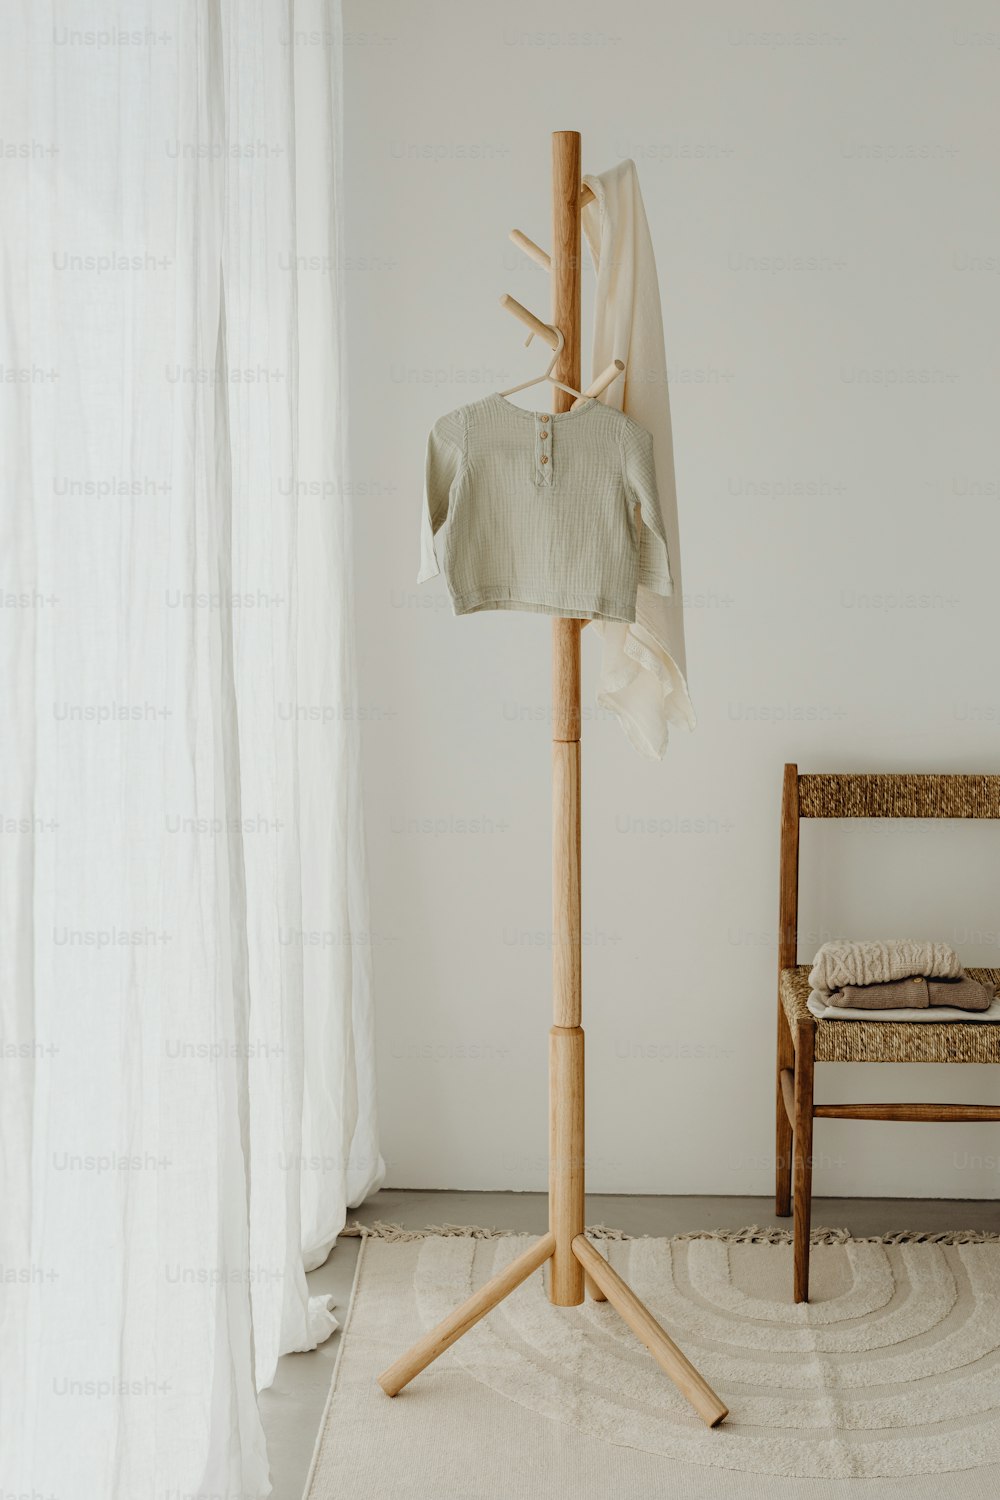 Una silla de madera sentada junto a una cortina blanca